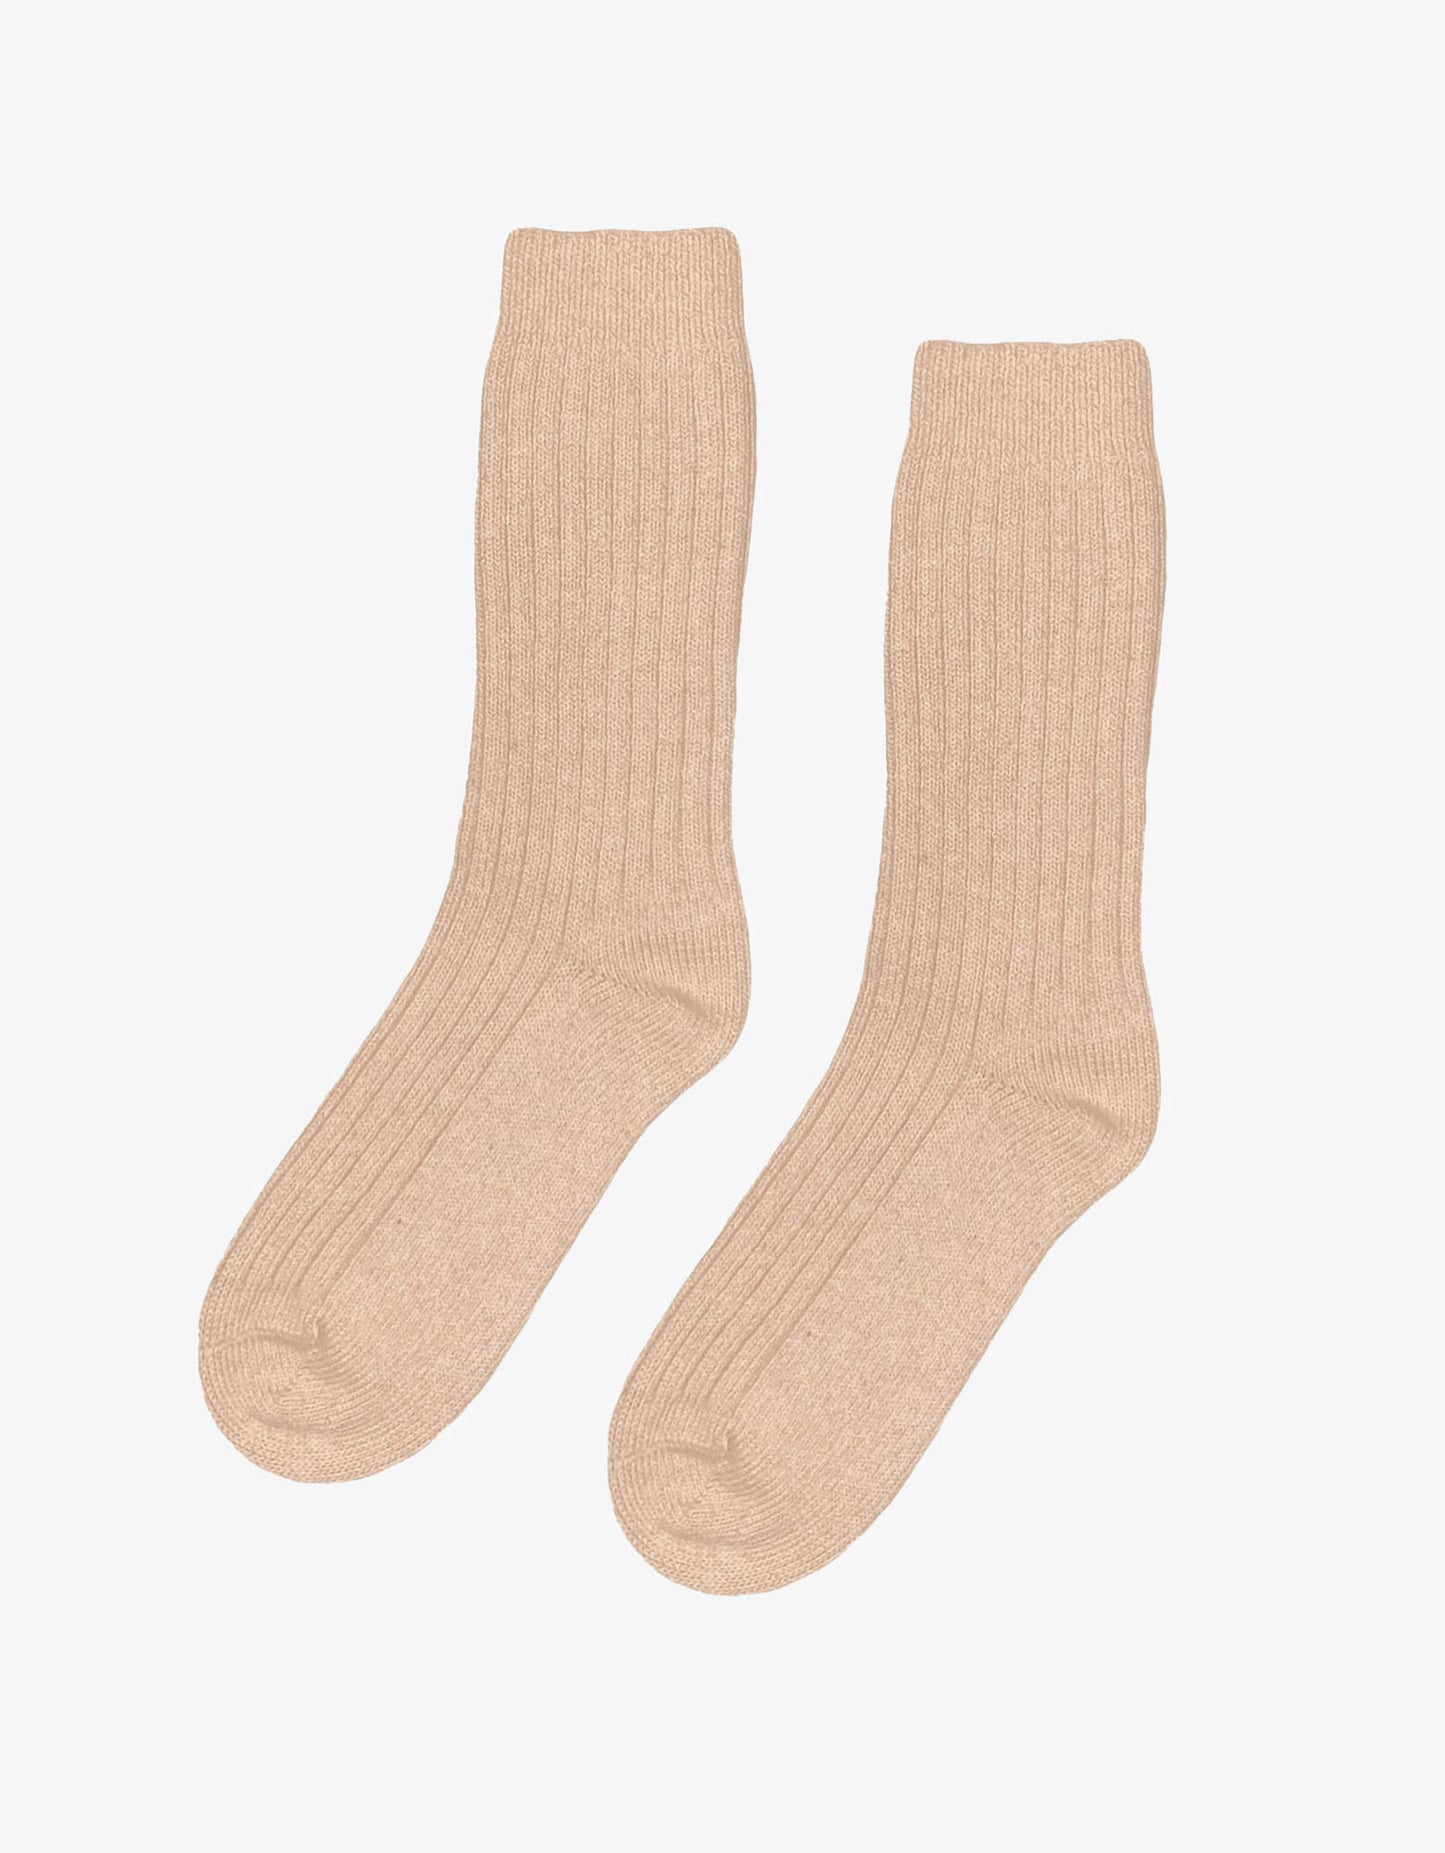 Merino Wool Socks - Honey Beige